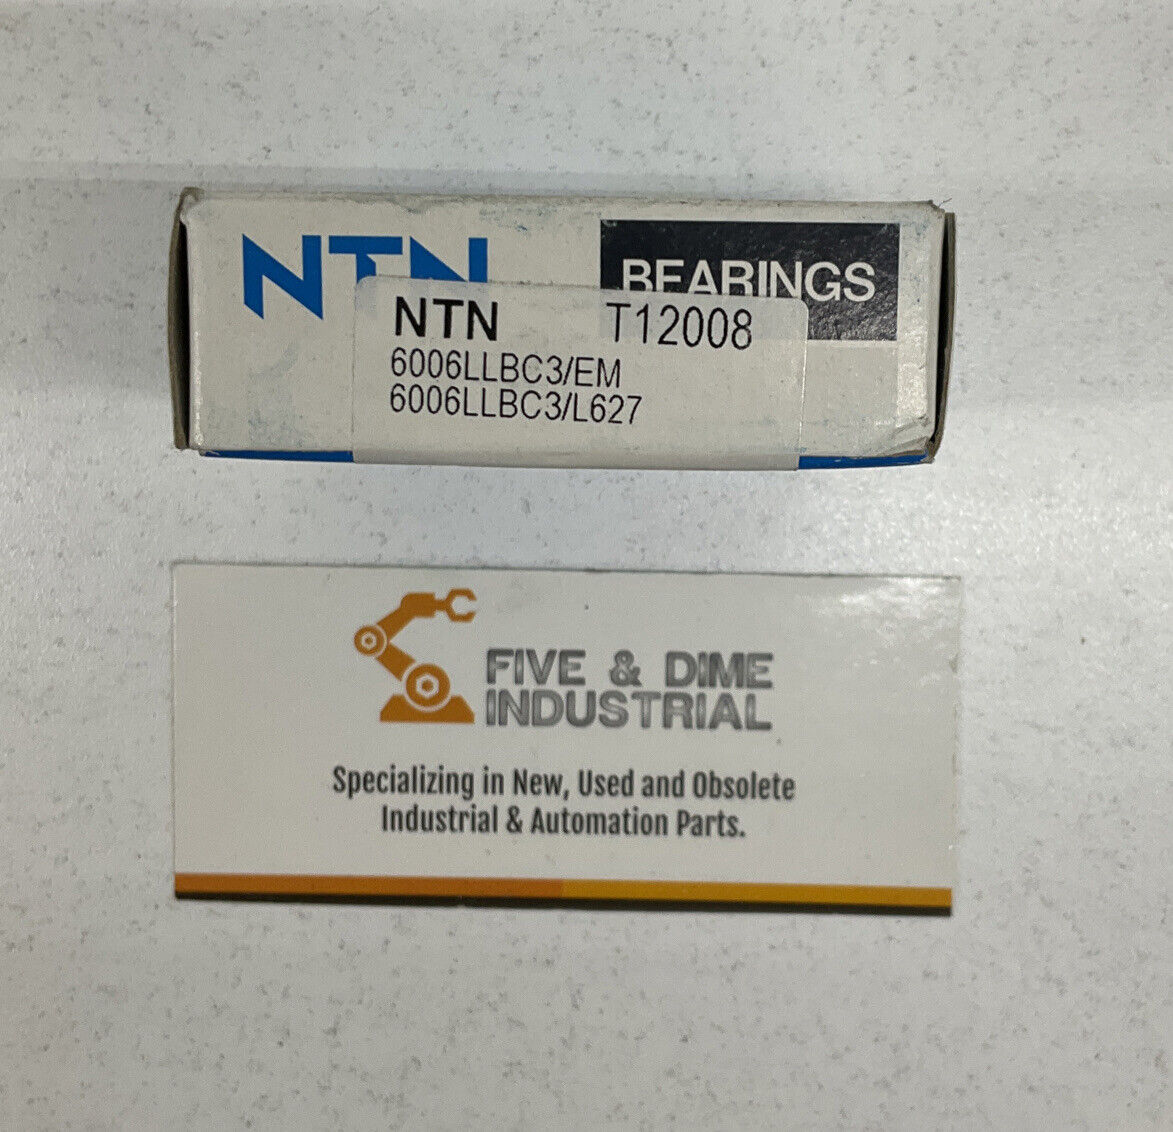 NTN 60006LLBC3/L627 Bearings T12008 (BL194)